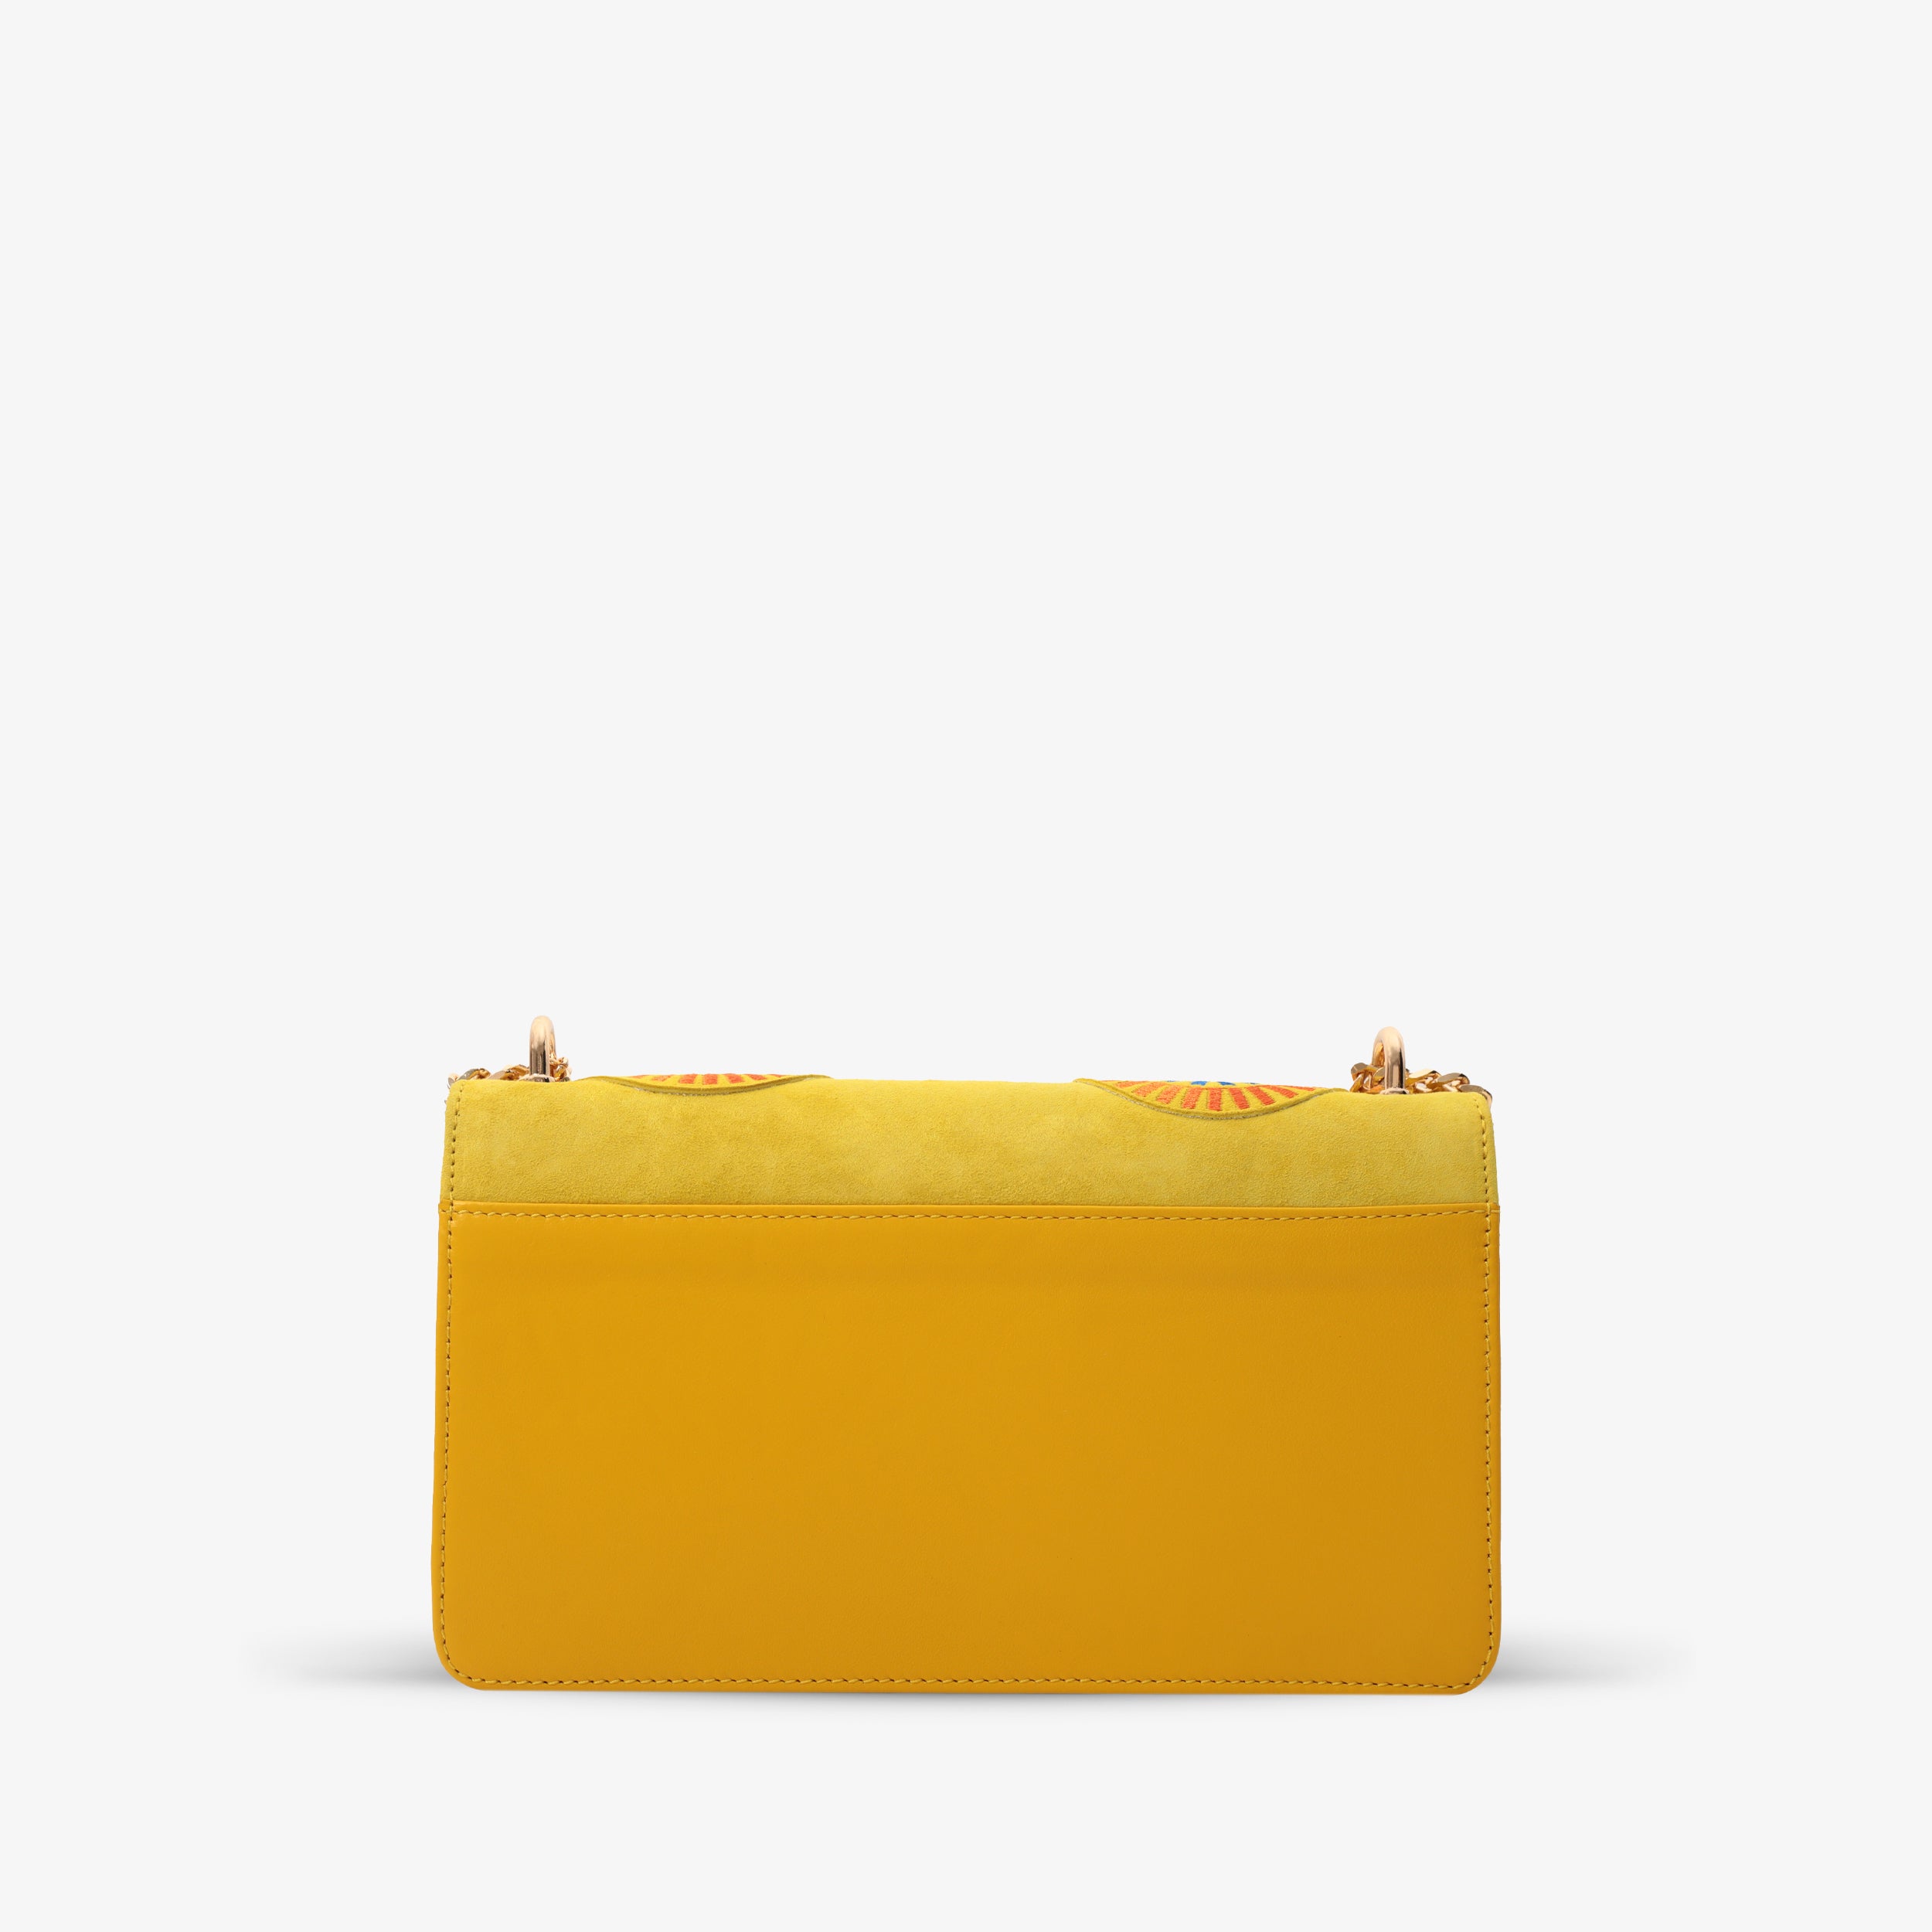 Mustard Yellow Faux Leather Women's Small Purse Handbag Shoulder Bag - EUC  | eBay